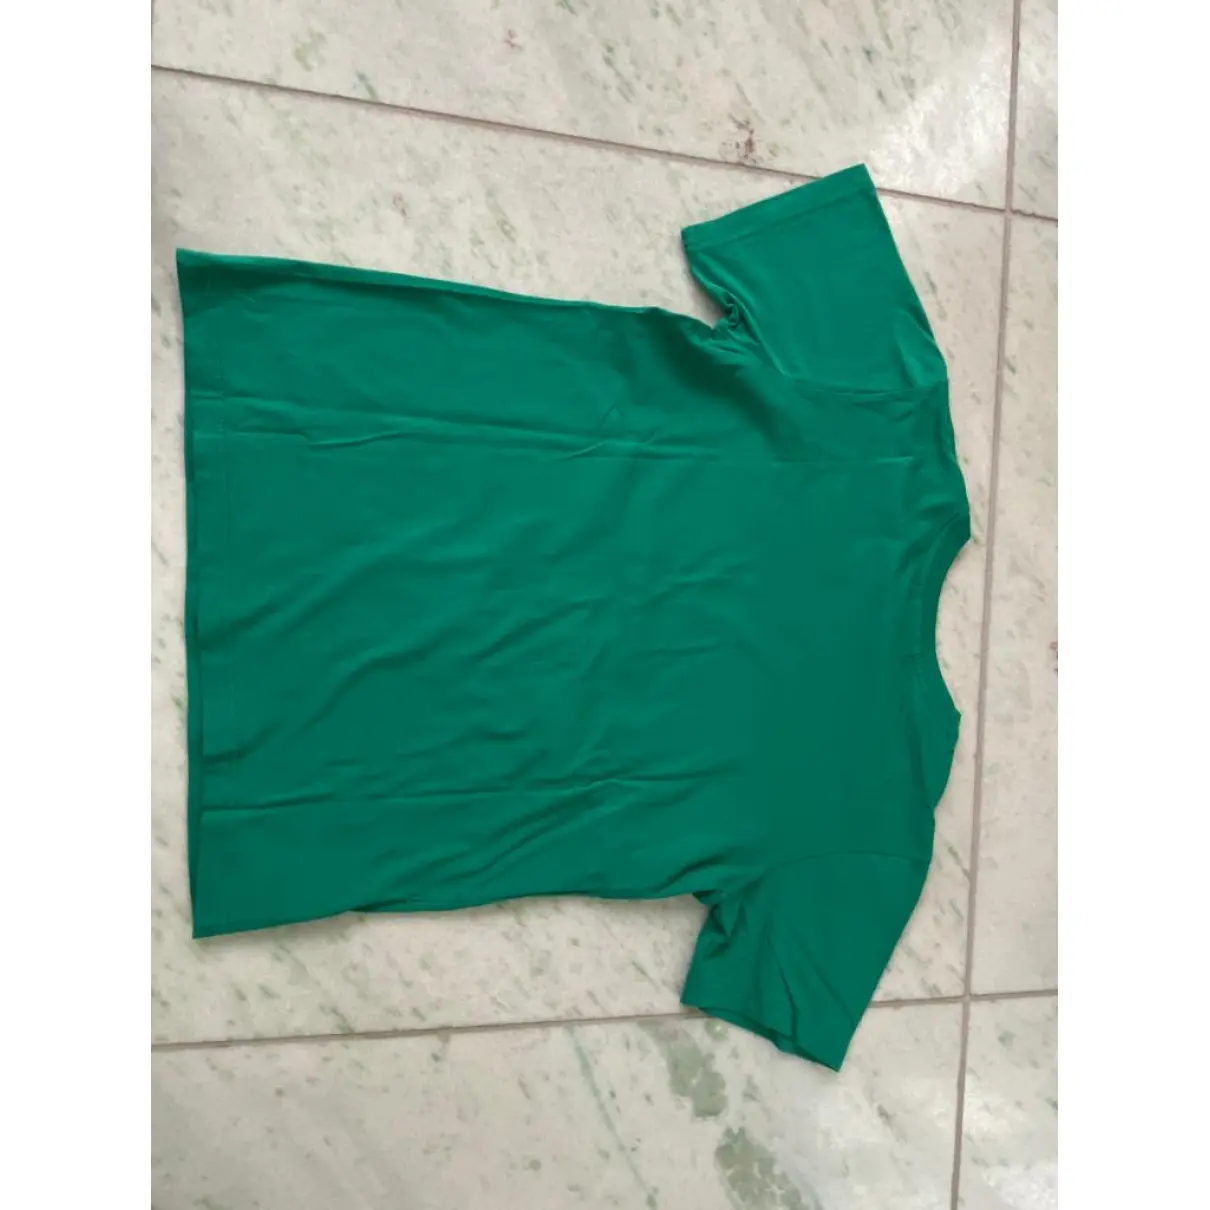 Buy Lacoste Green Cotton Top online